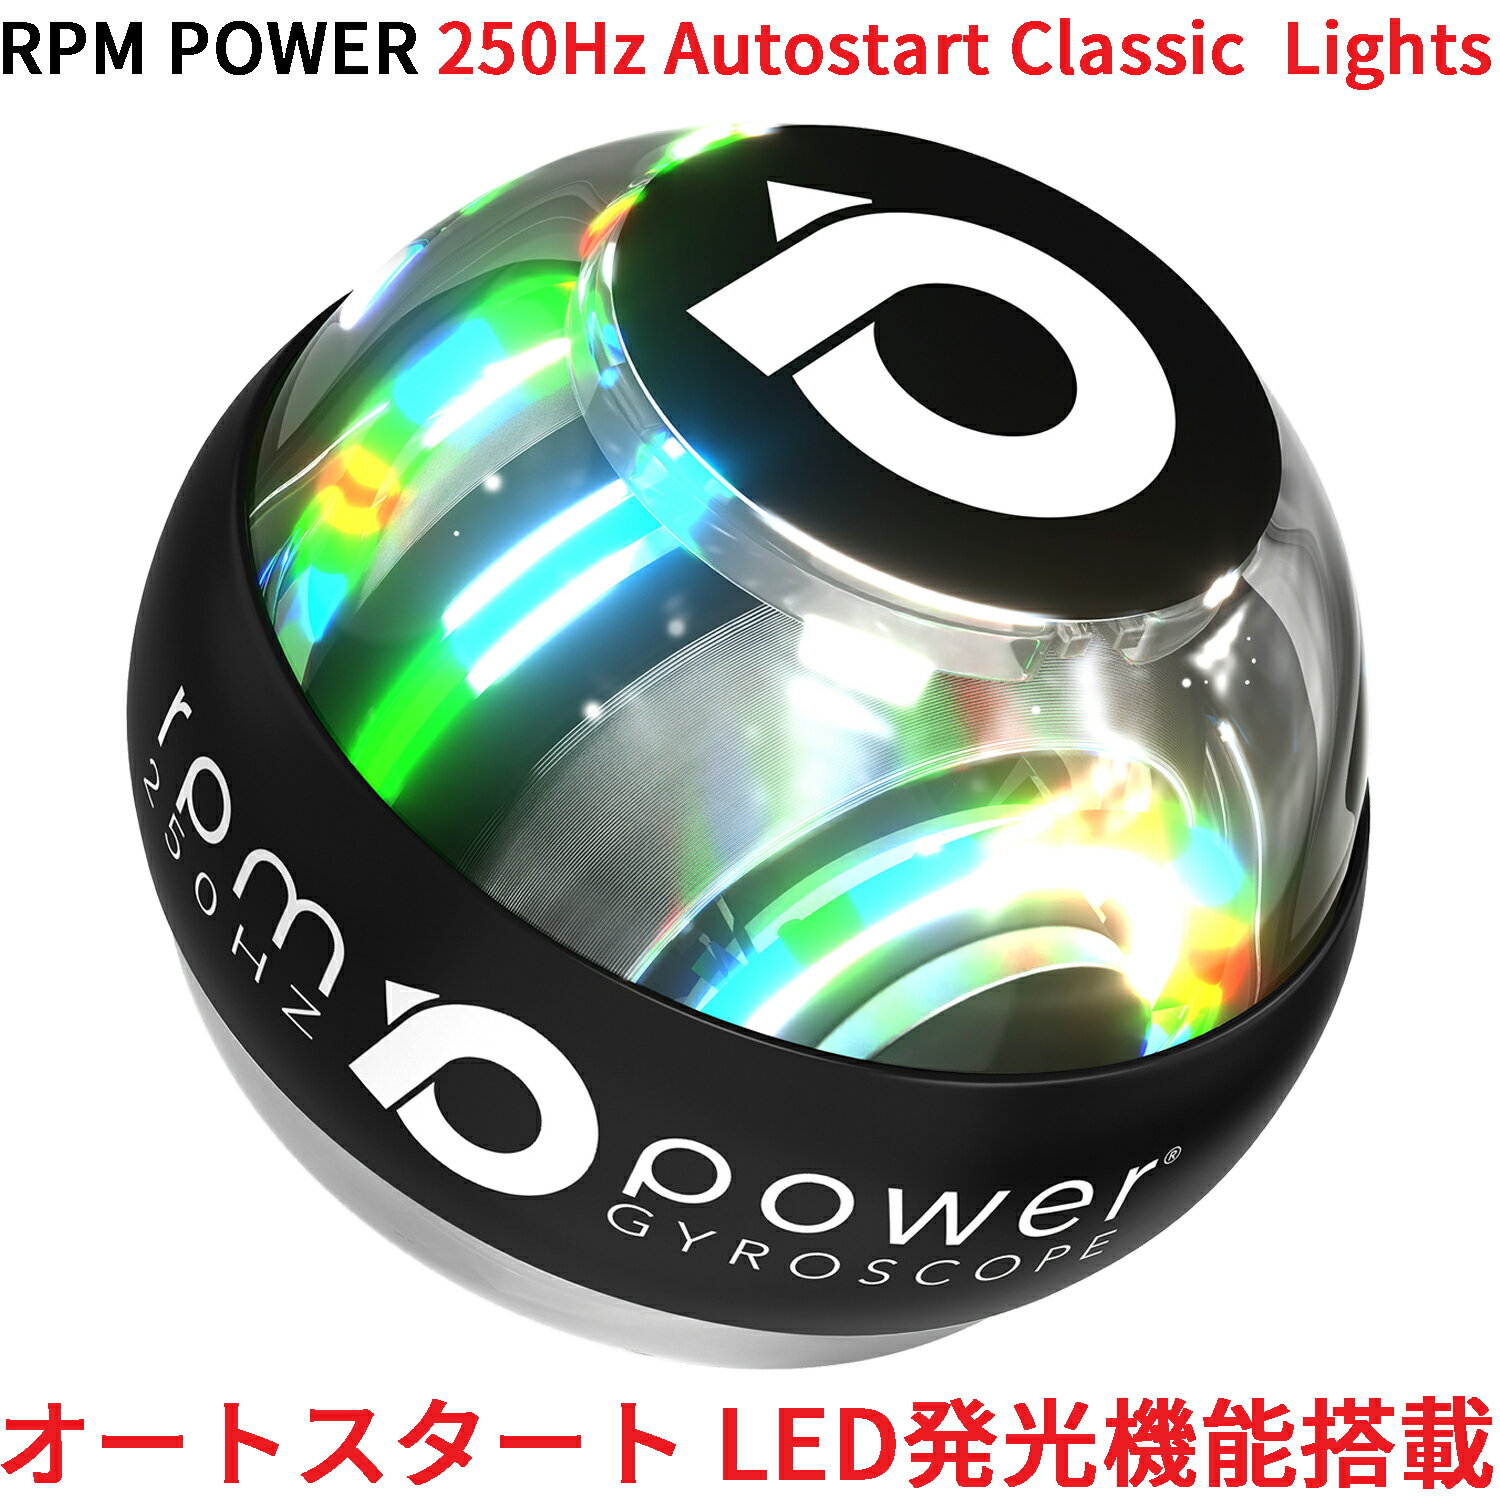 RPM Power 250Hz Autostart Classic Lights オートスタート LED発光 機能搭載 筋トレ 筋力トレーニング 握力 前腕 手首 静音 高品質 人気 自動 器具 トレーニング ボール ローラー リストボー…